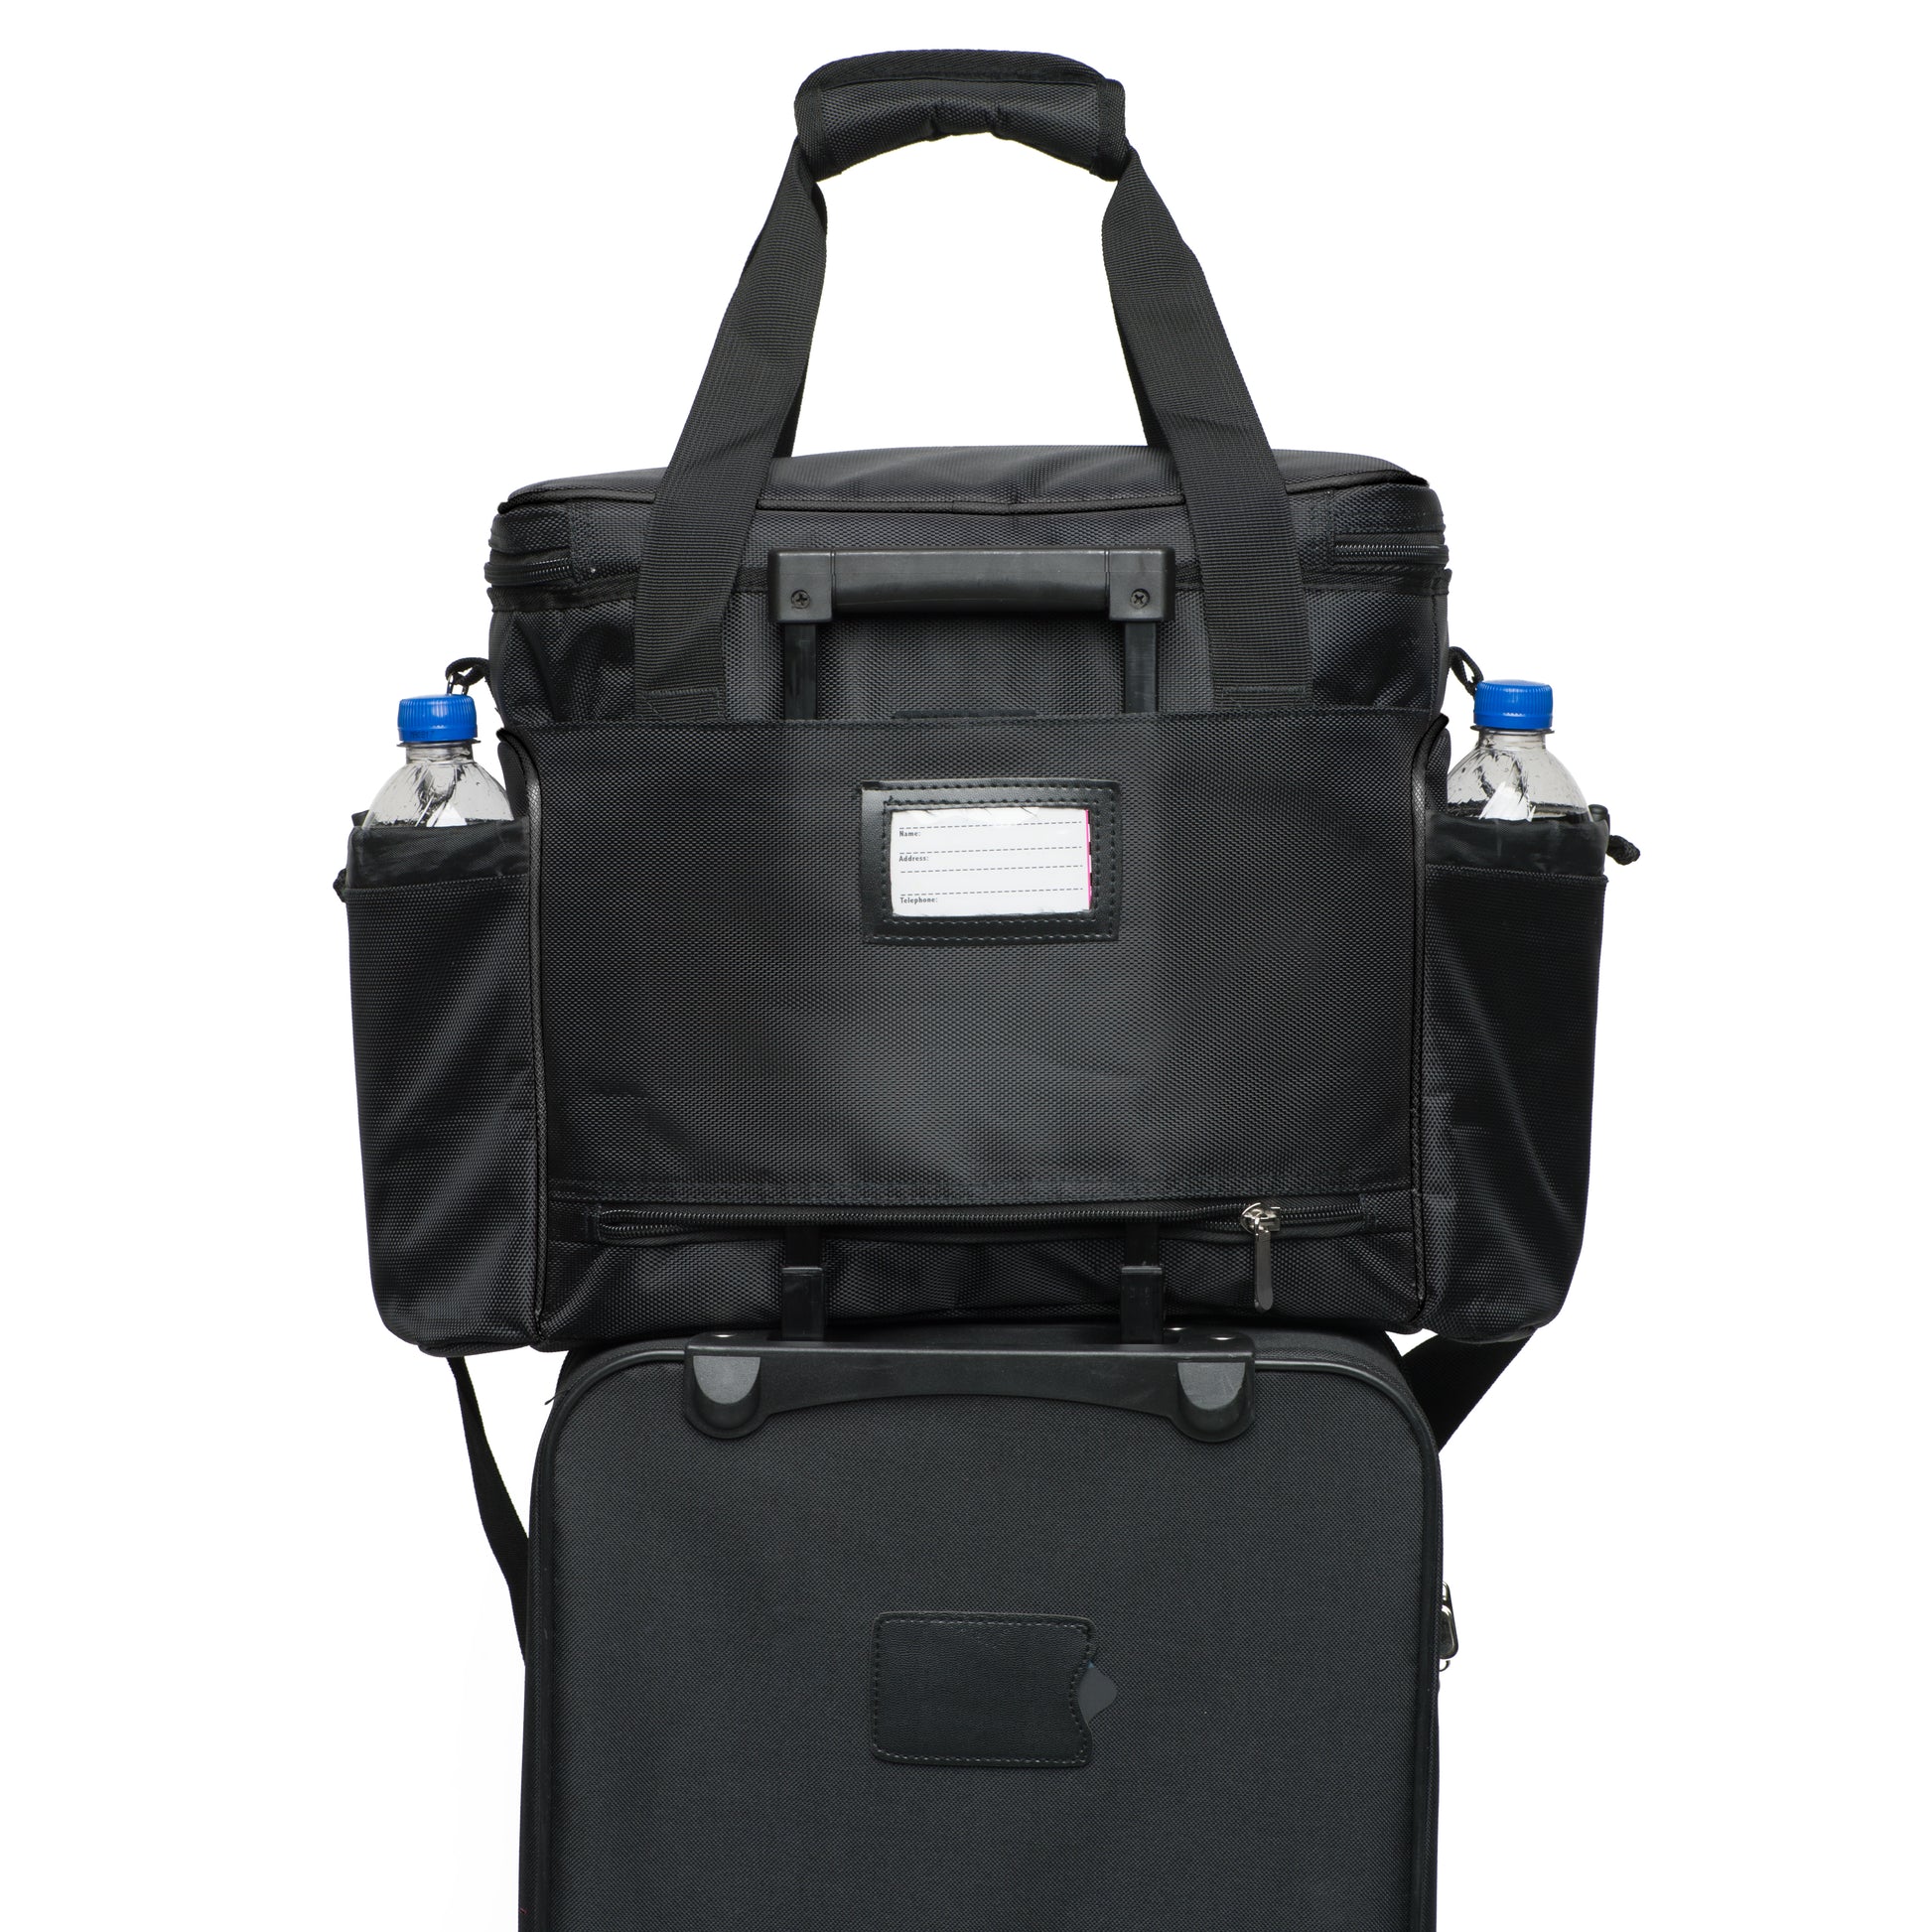 BERGGYLTA Lunch bag - black 14x11x22 cm (5 ½x4 ¼x8 ¾ )